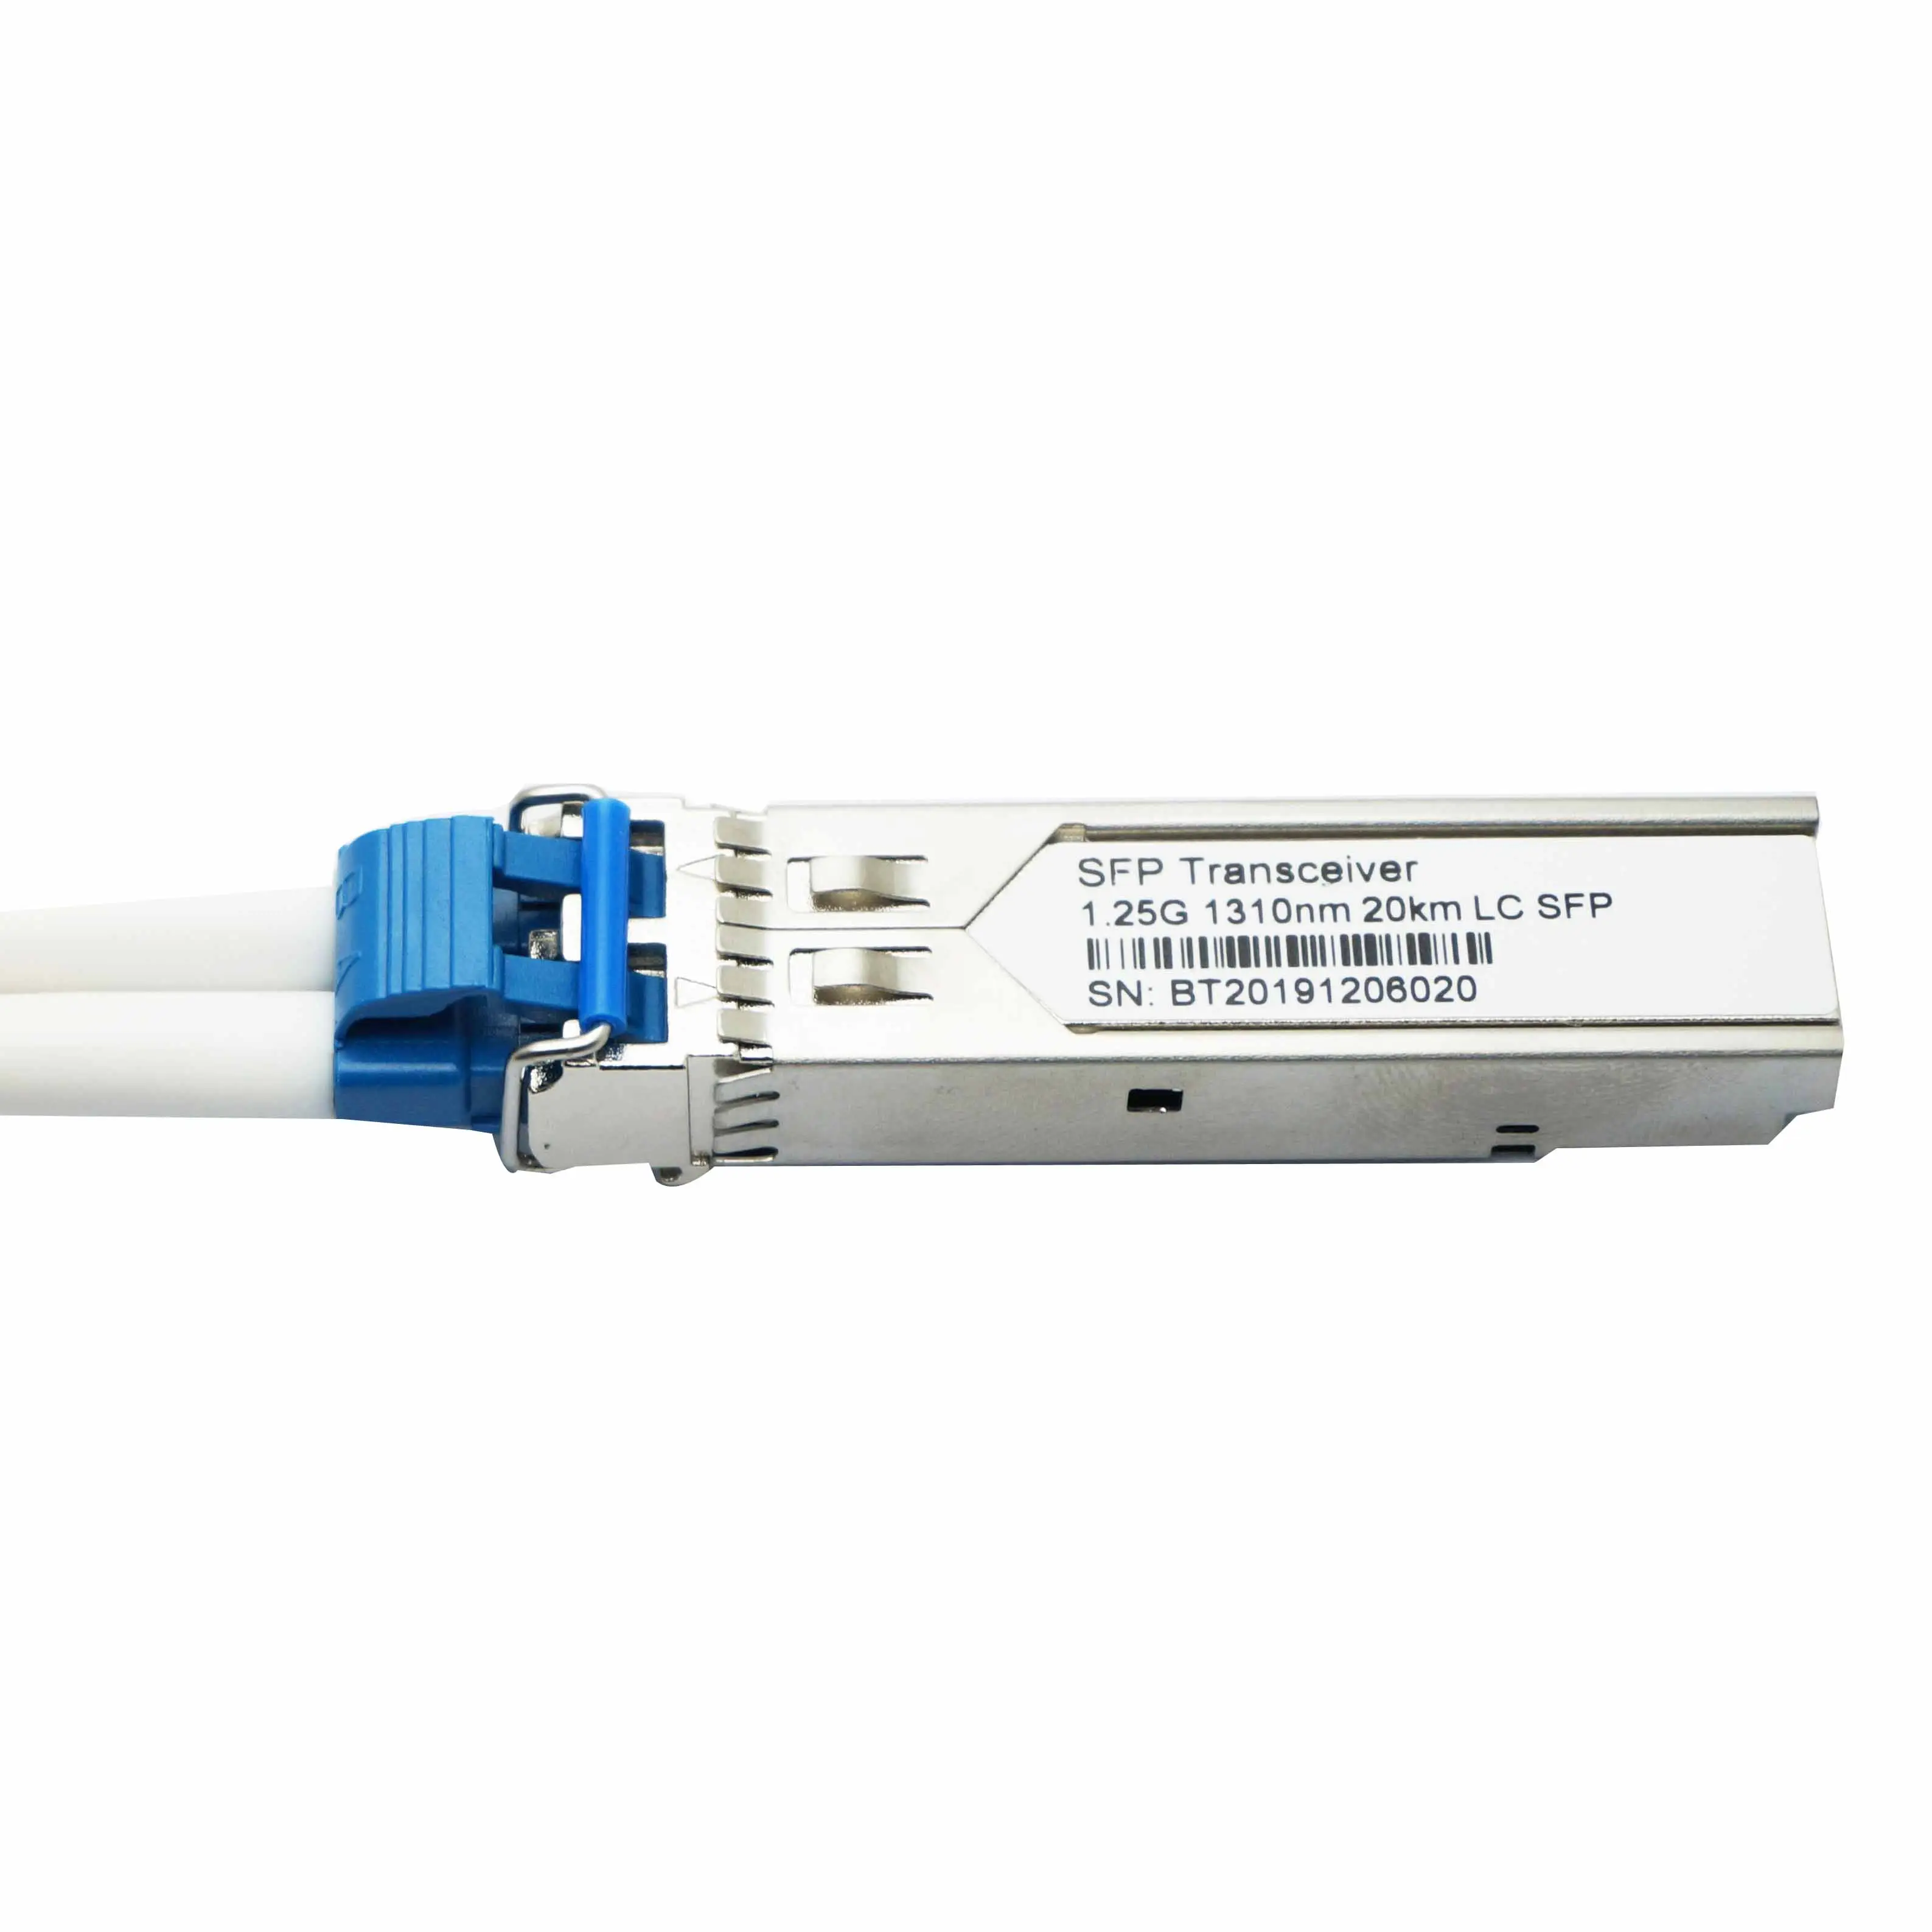 BTON compatible GSRX-SFP-1GE-LX /SFP-1GE-LX/ JD119B 1,25g 20km sfp